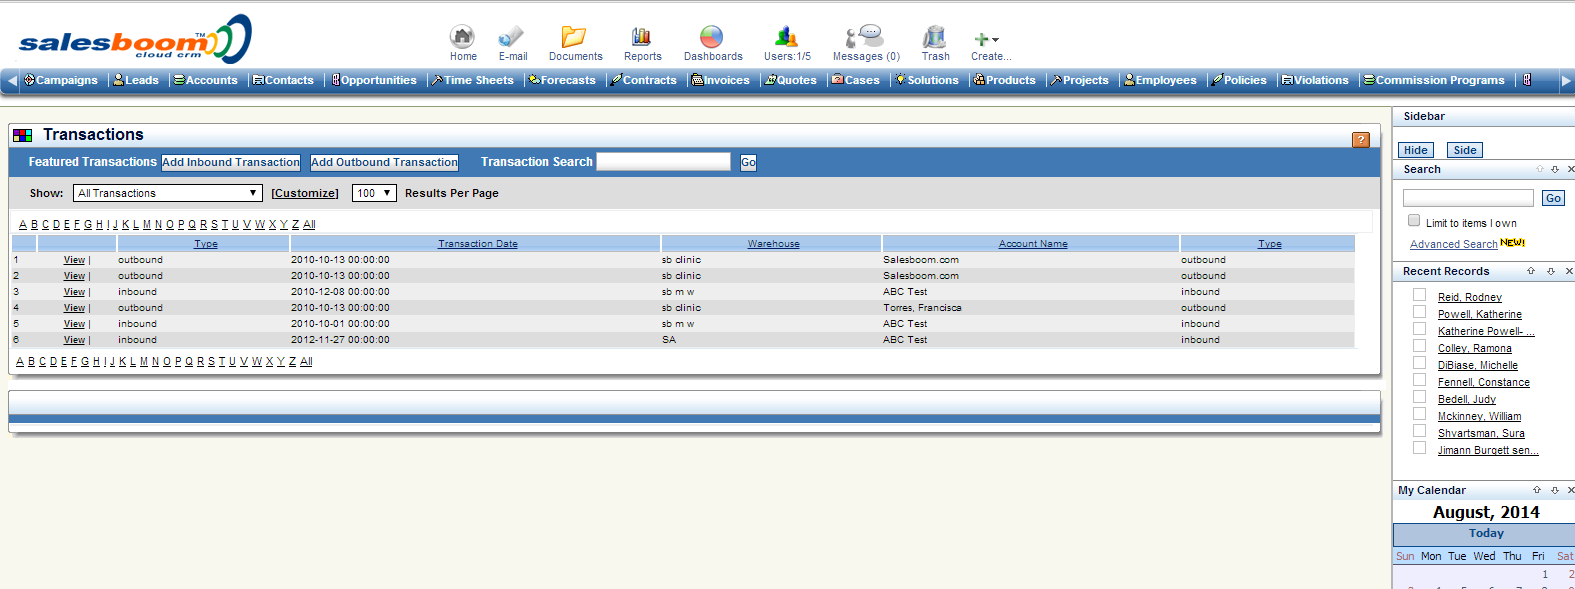 crm-inbound-transactions-screenshot | Salesboom cloud CRM